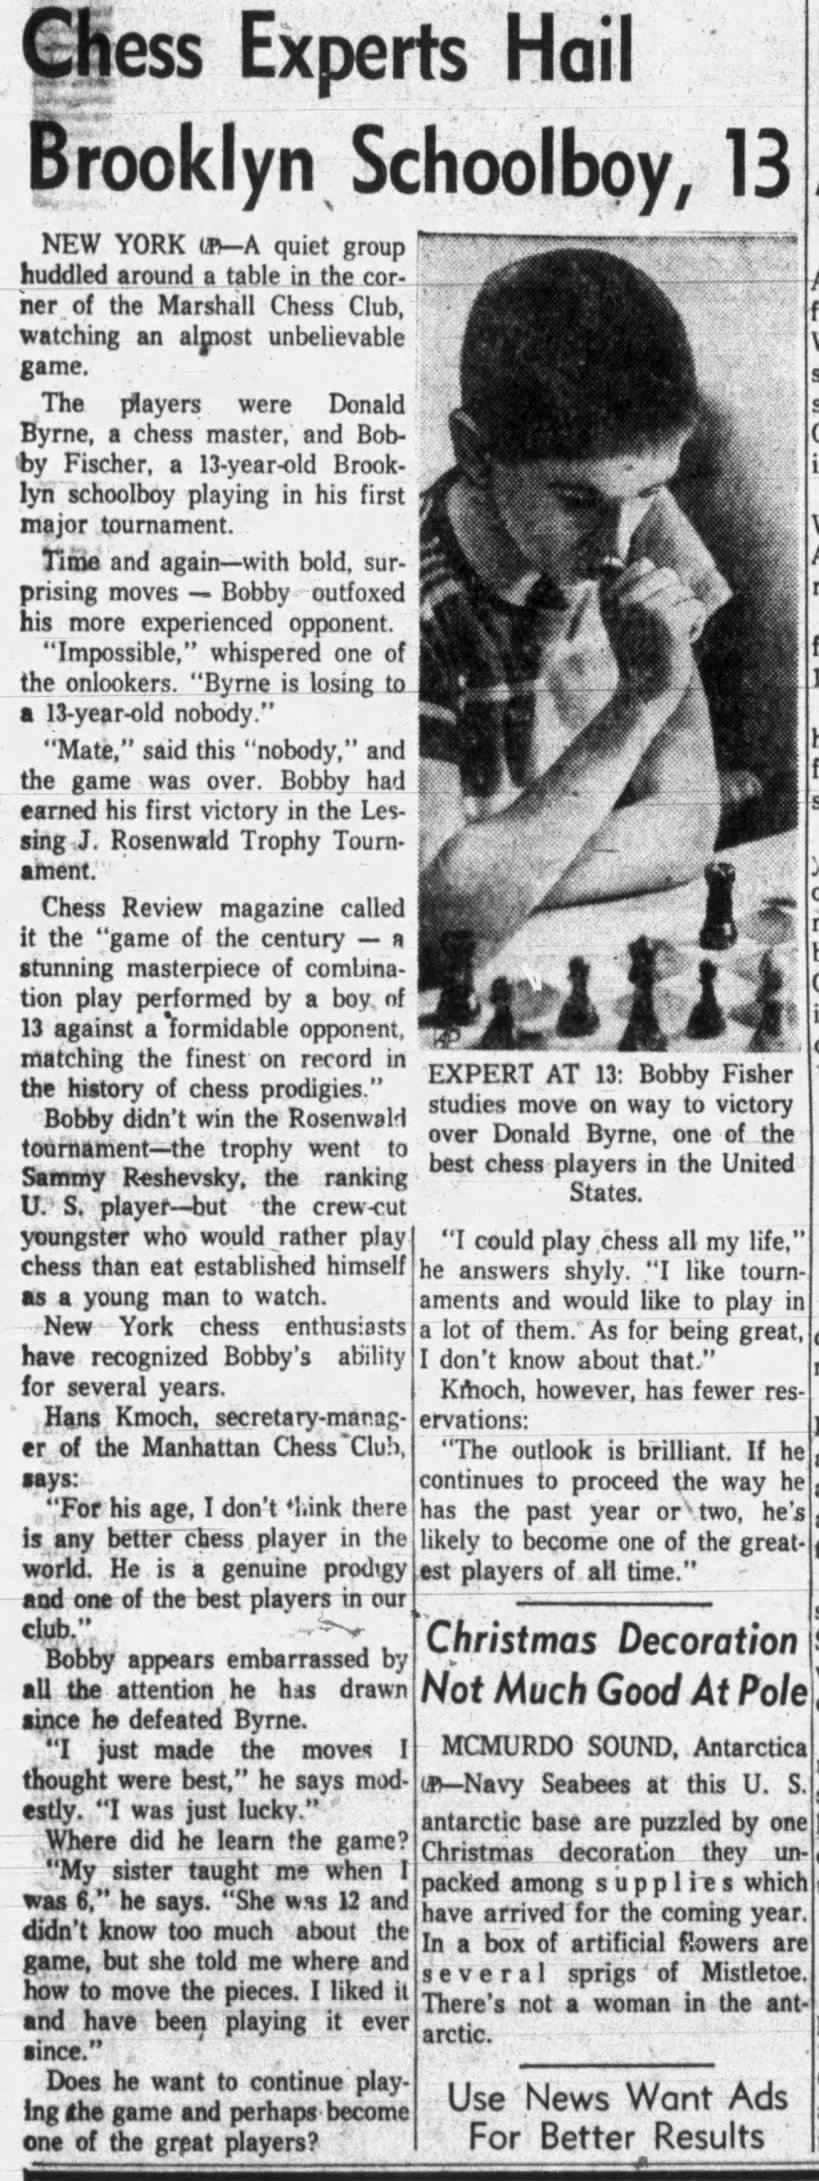 Chess Experts Hail Brooklyn Schoolboy, 13